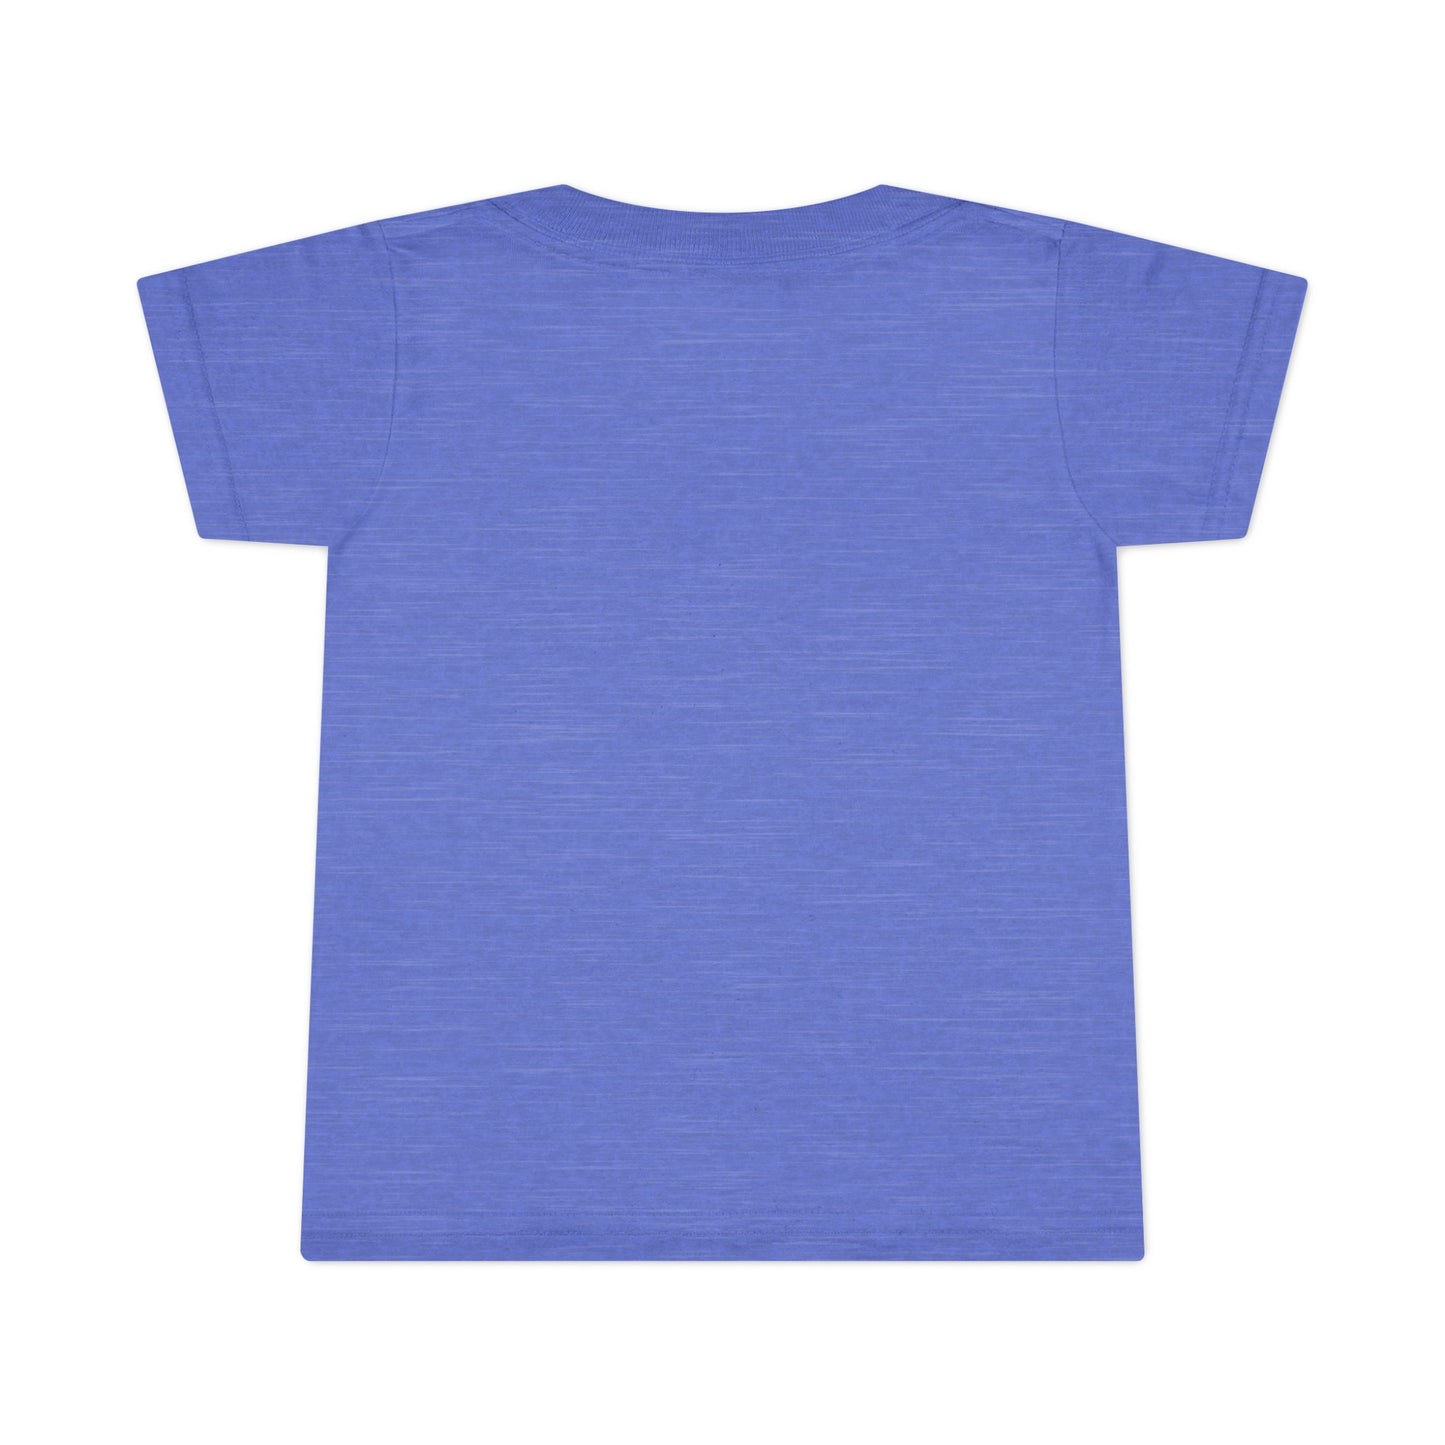 Family - Classic Brooklyn Tech - Toddler Ringspun Cotton T-Shirt